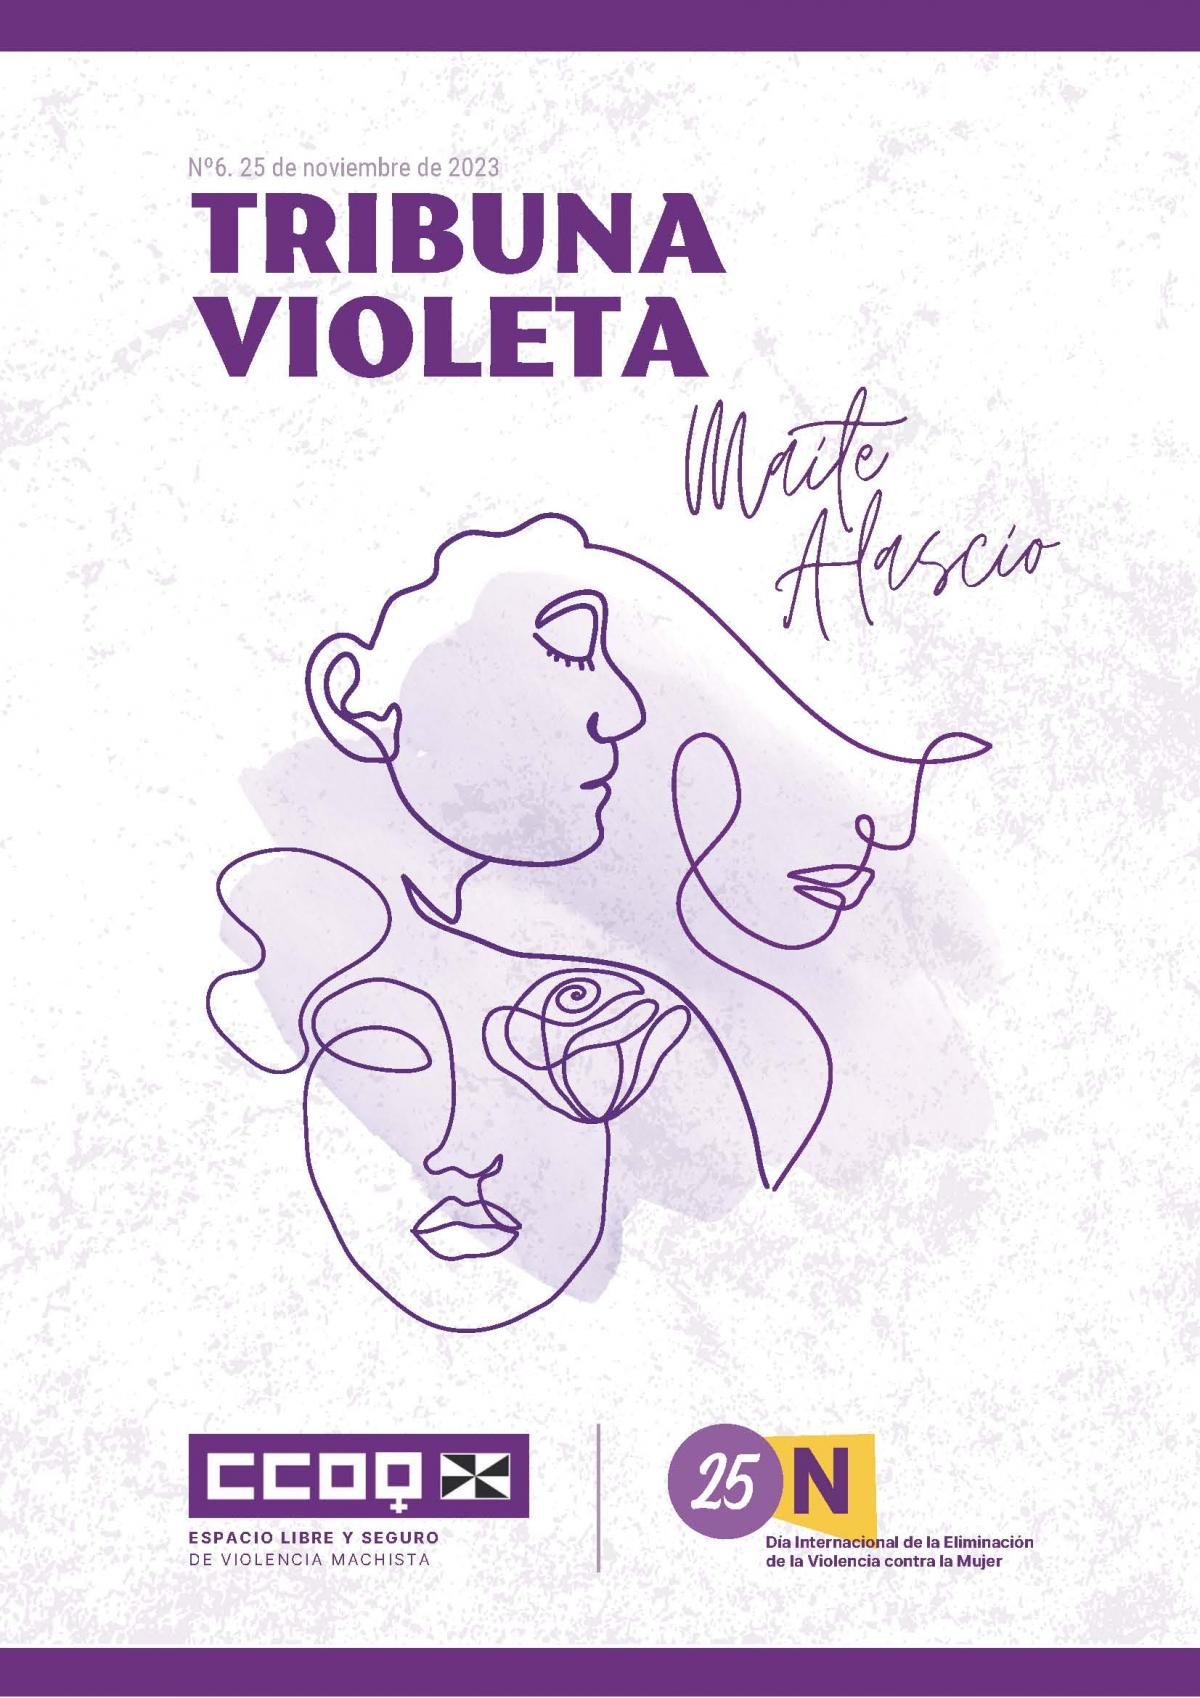 "Tribuna Violeta Maite Alascio", n. 6 (noviembre de 2023).